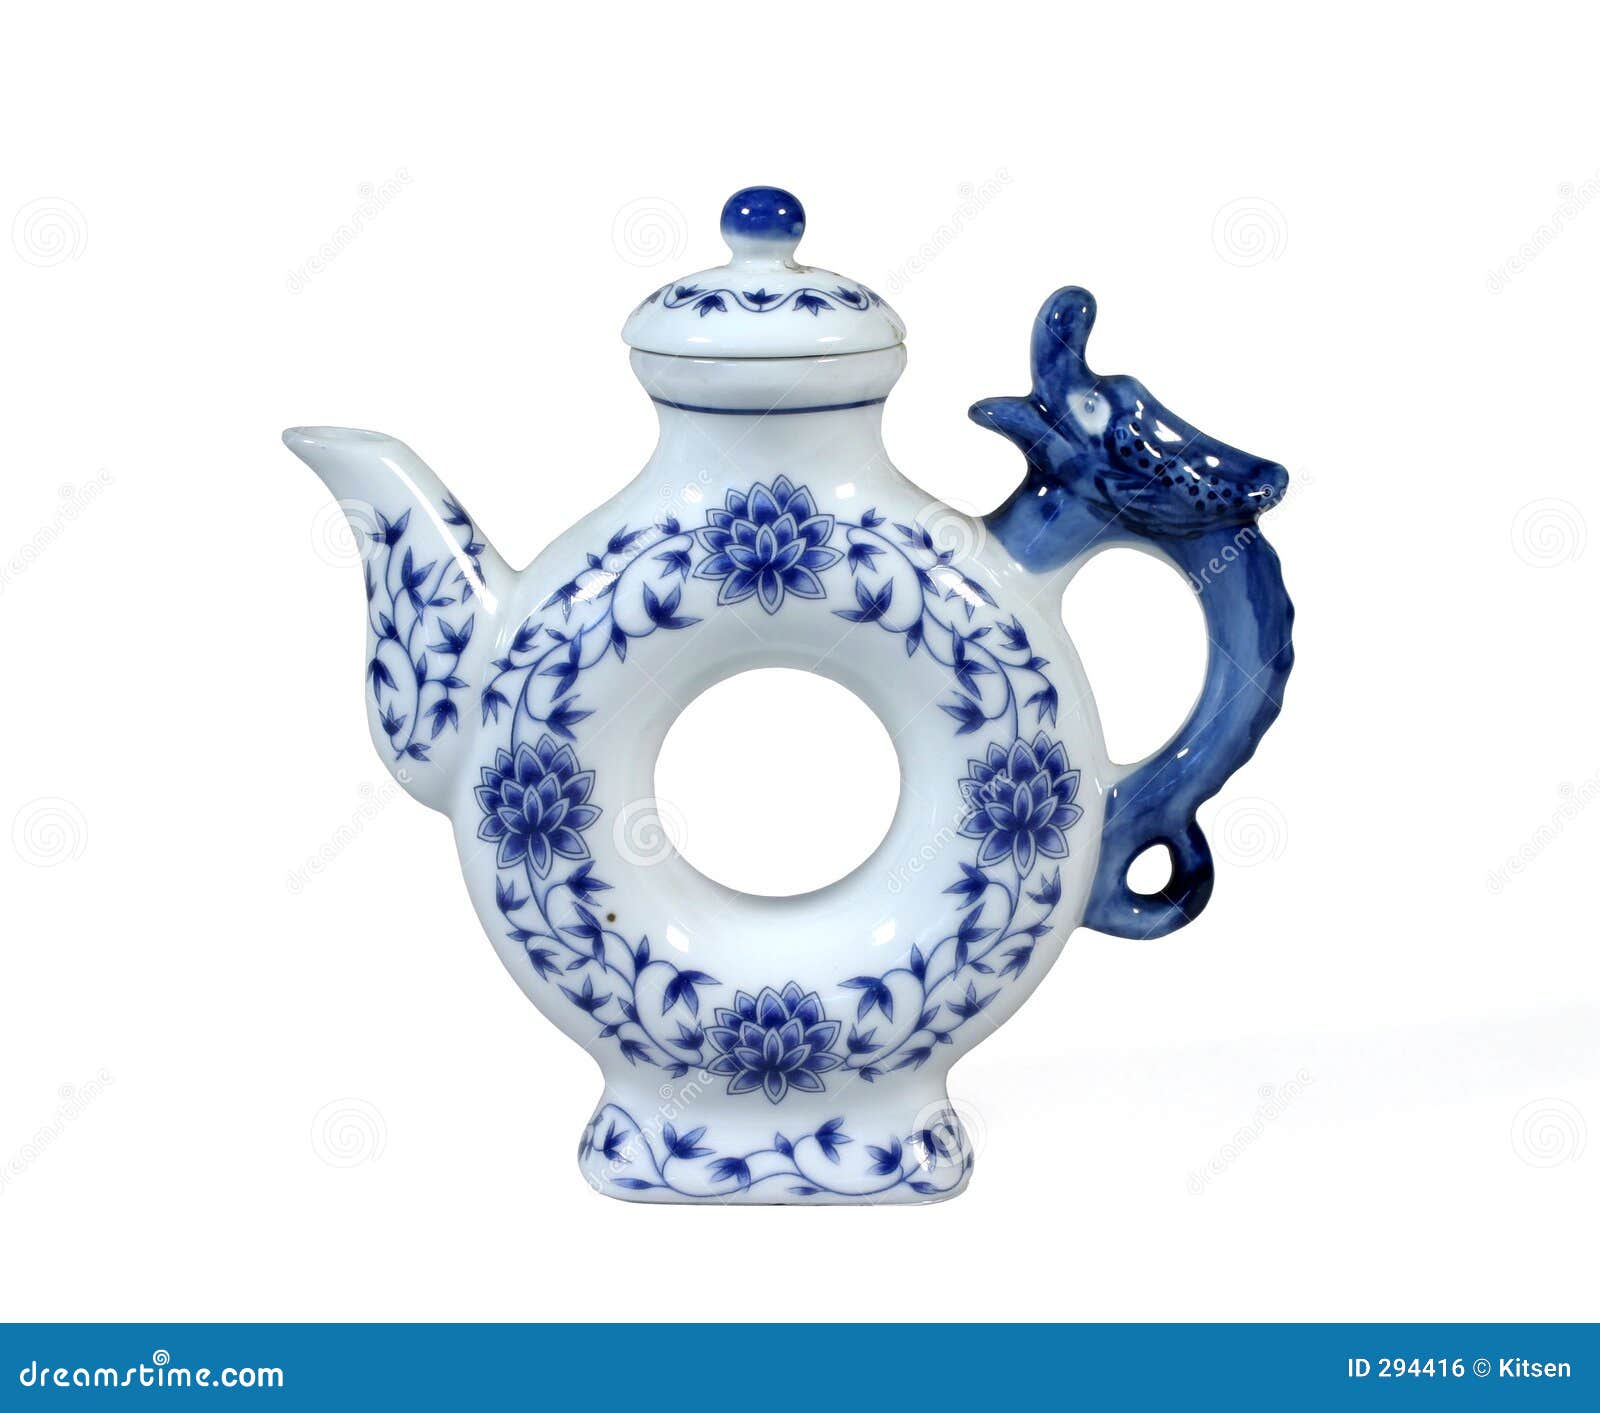 unusual china teapot